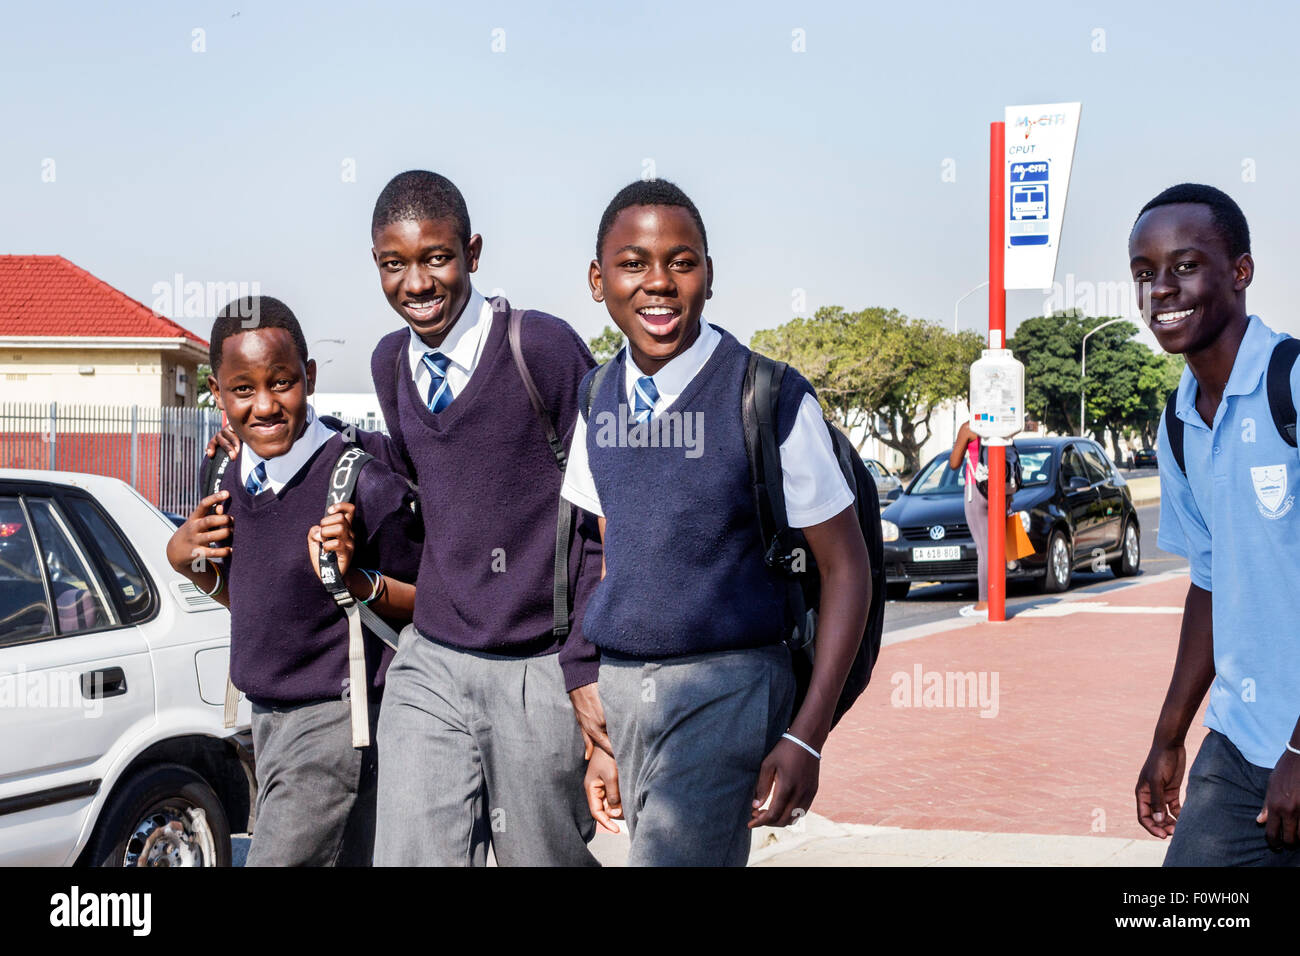 Cape Town South Africa,Zonnebloem,Black Afro American,boy,teen teens teenager teenagers friends,student students school uniform,SAfri150311061 Stock Photo